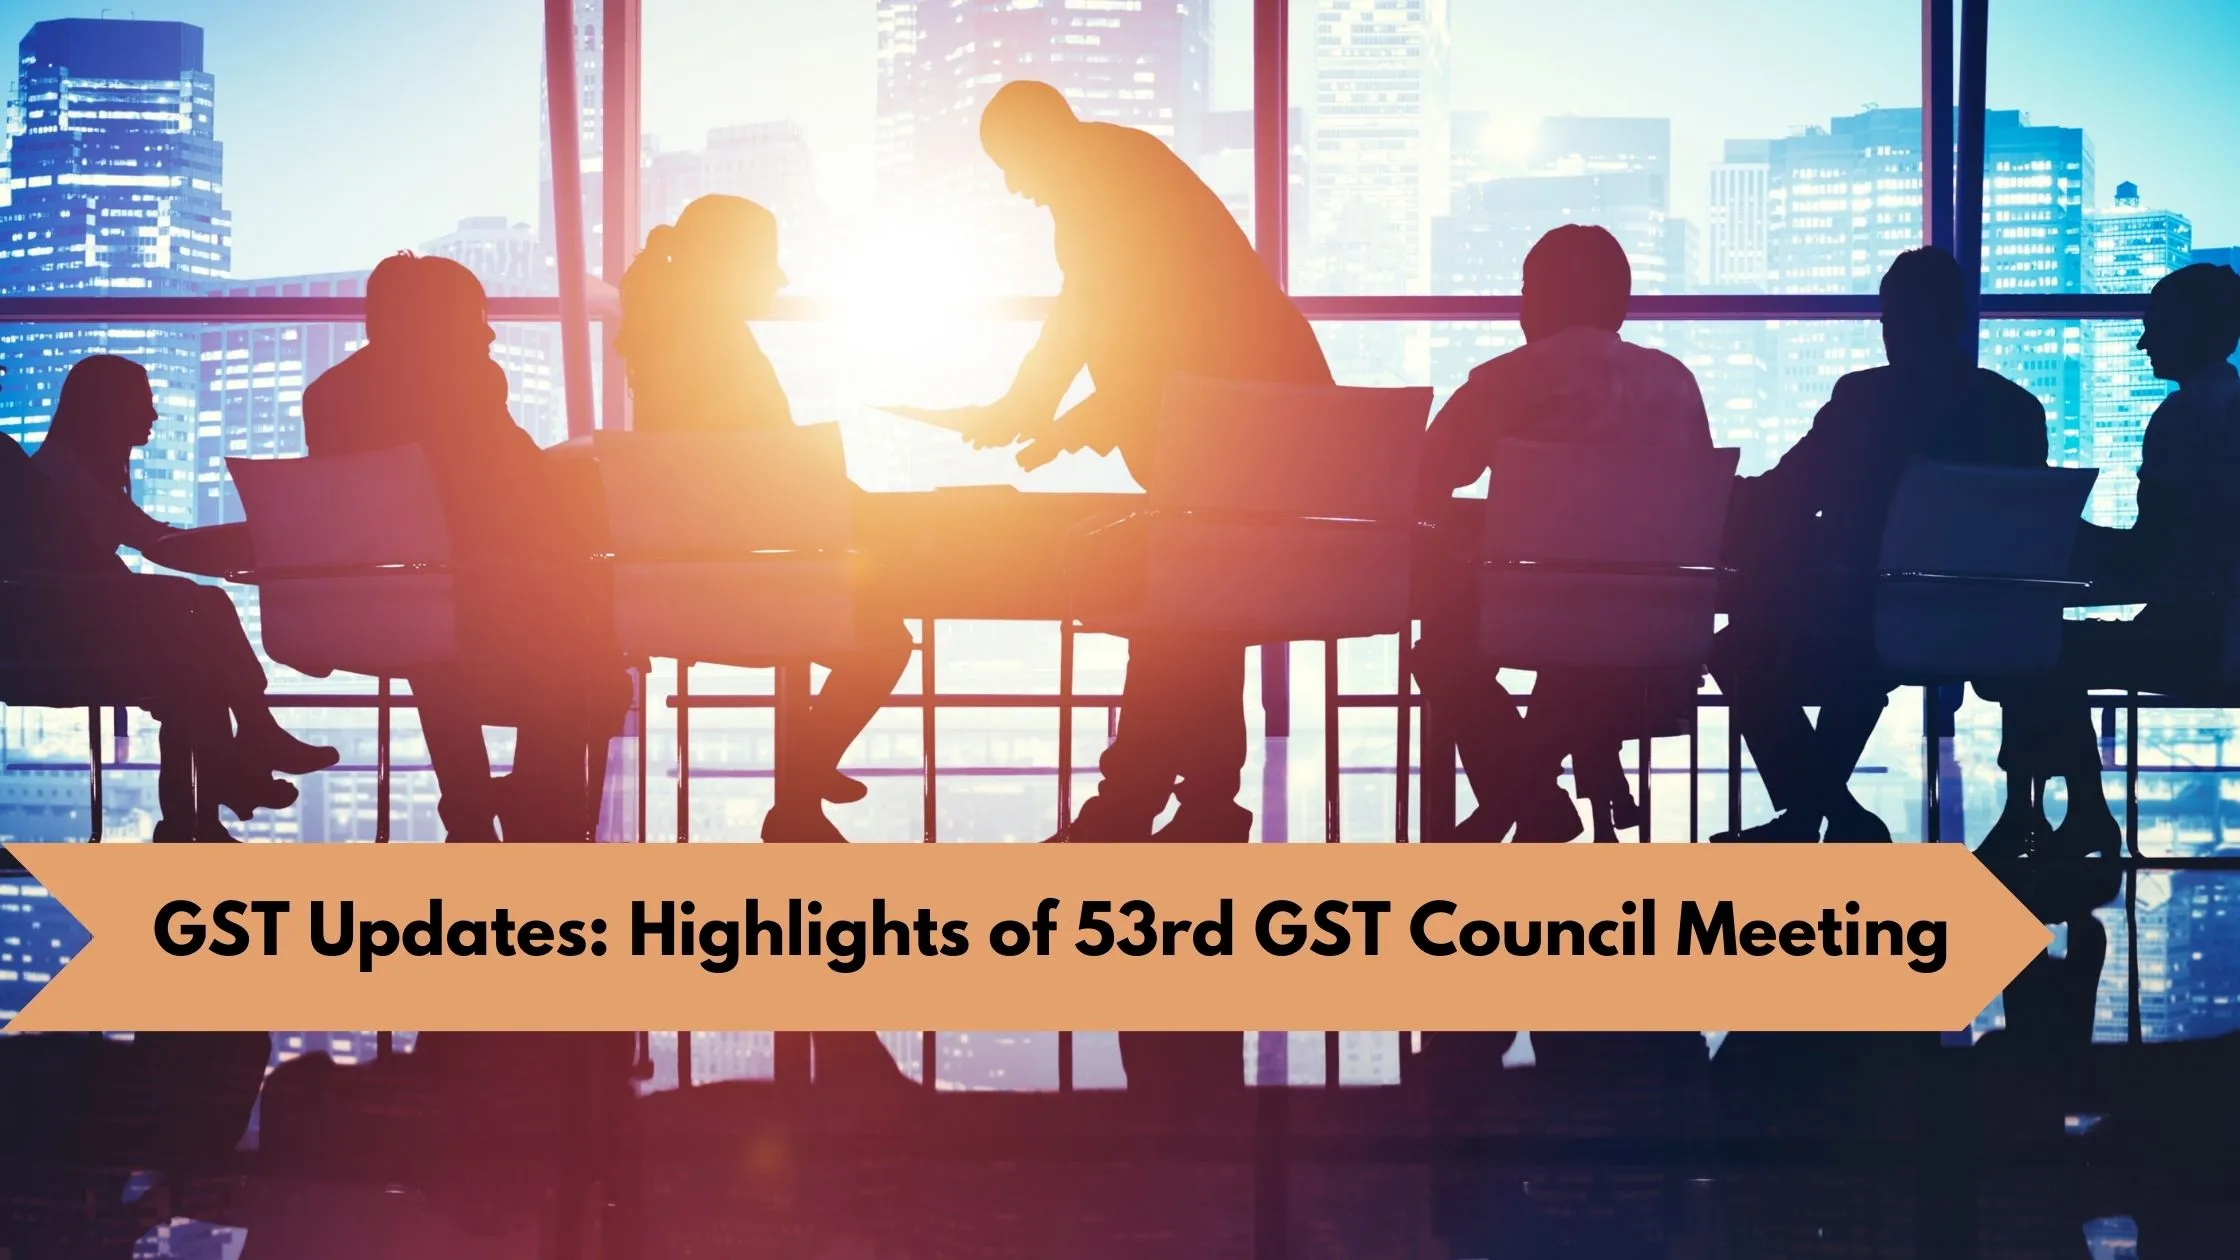 GST Updates: Highlights of 53rd GST Council Meeting